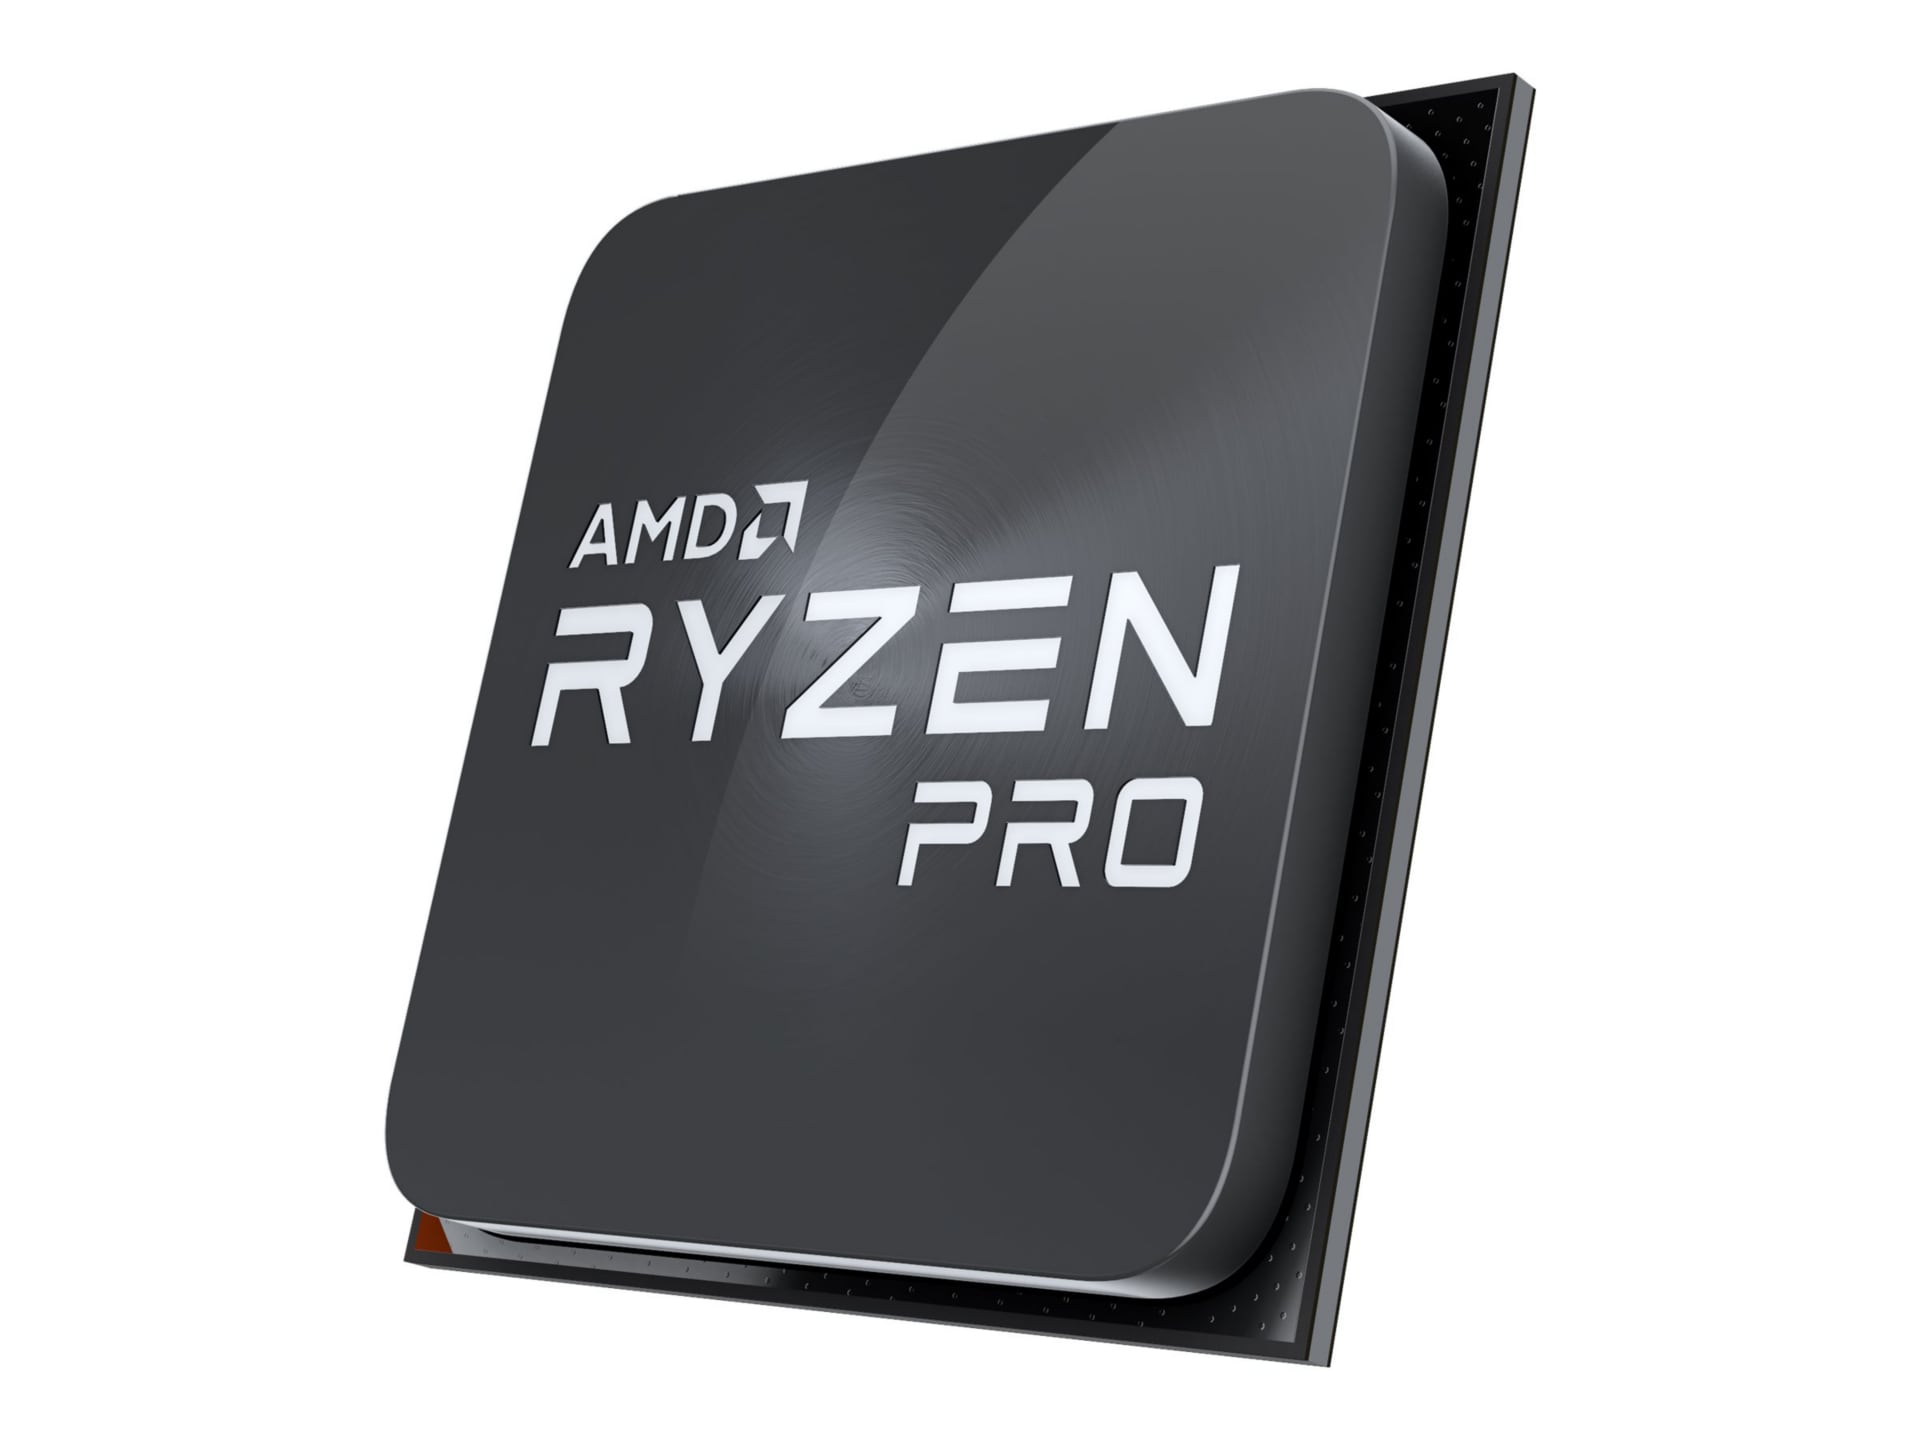 AMD Ryzen 5 Pro 2400G / 3.6 GHz processor